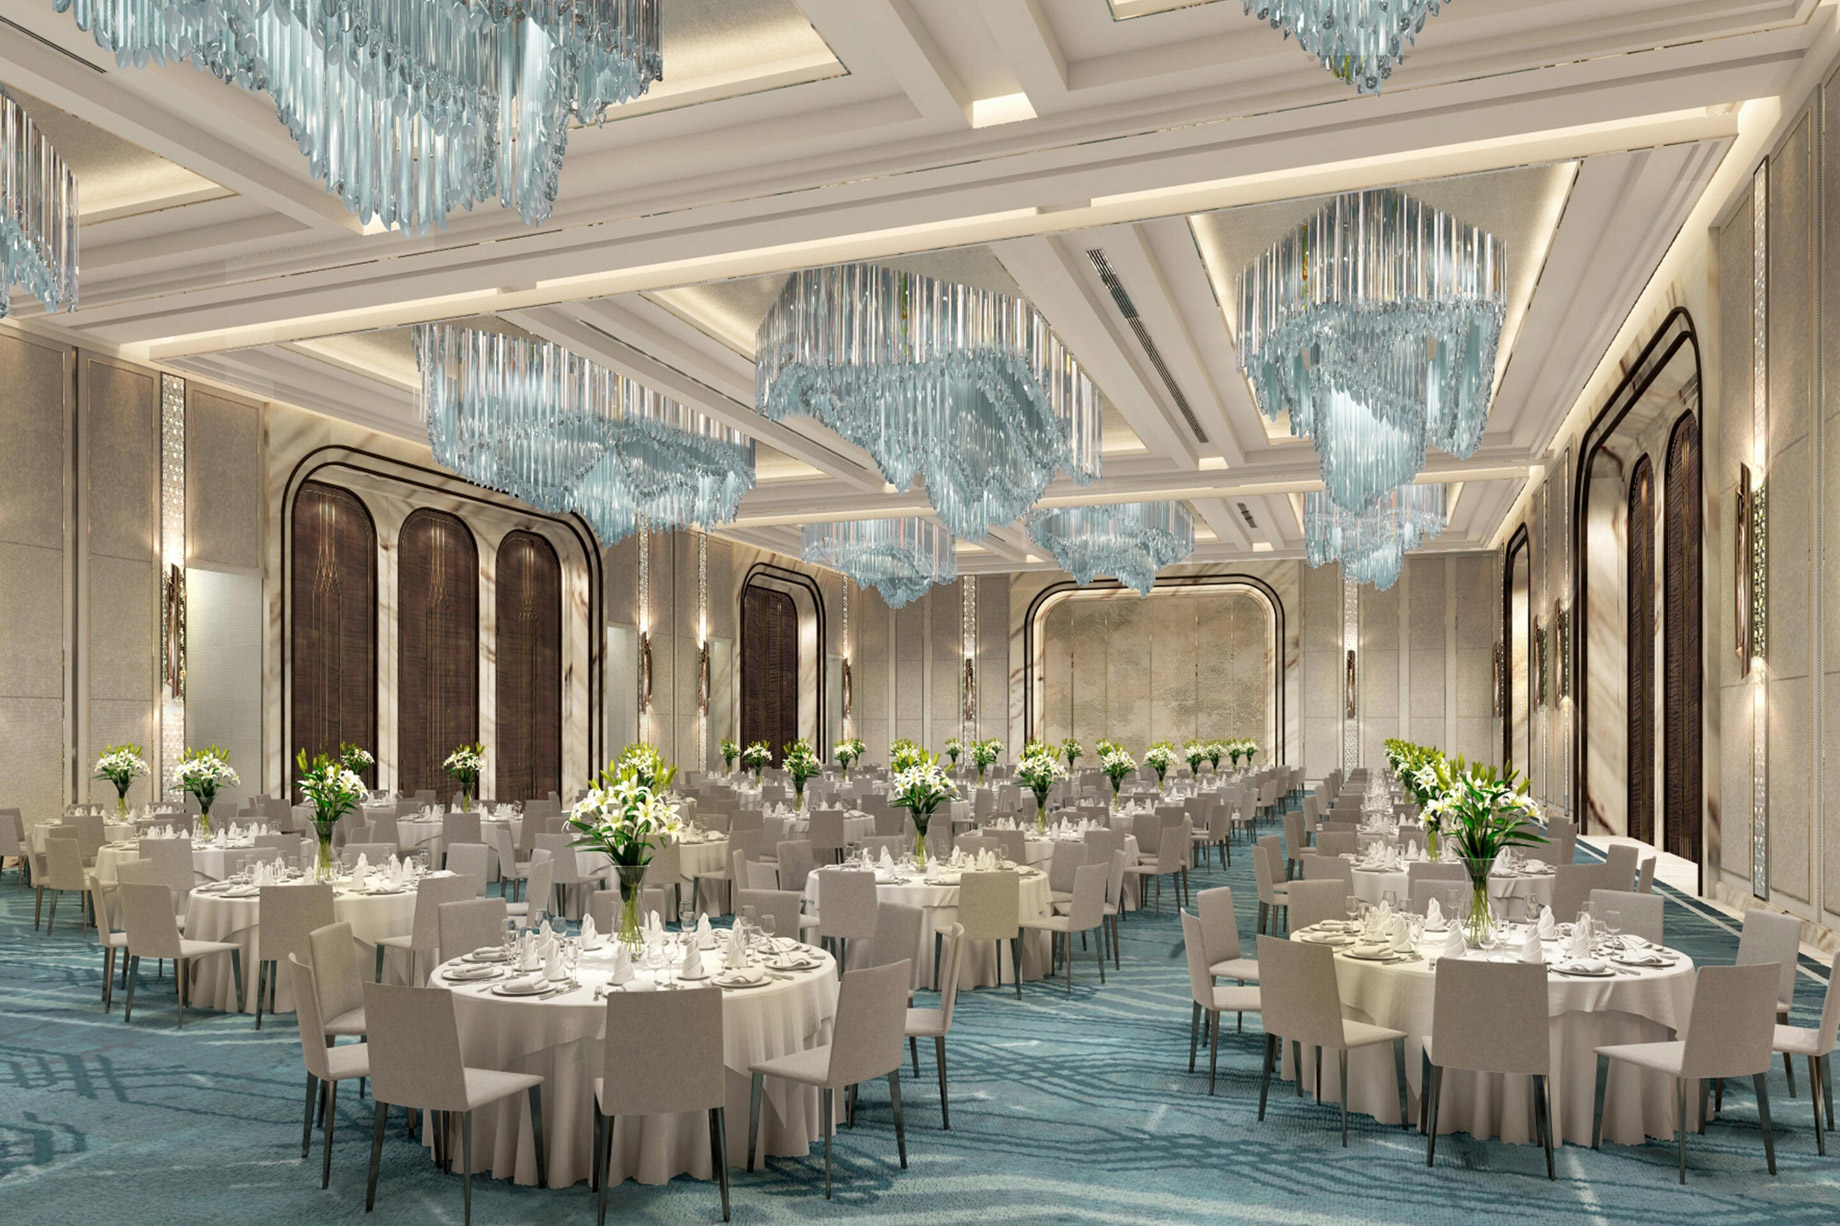 The St. Regis Qingdao Hotel - Qingdao, Shandong, China - Astor Ballroom